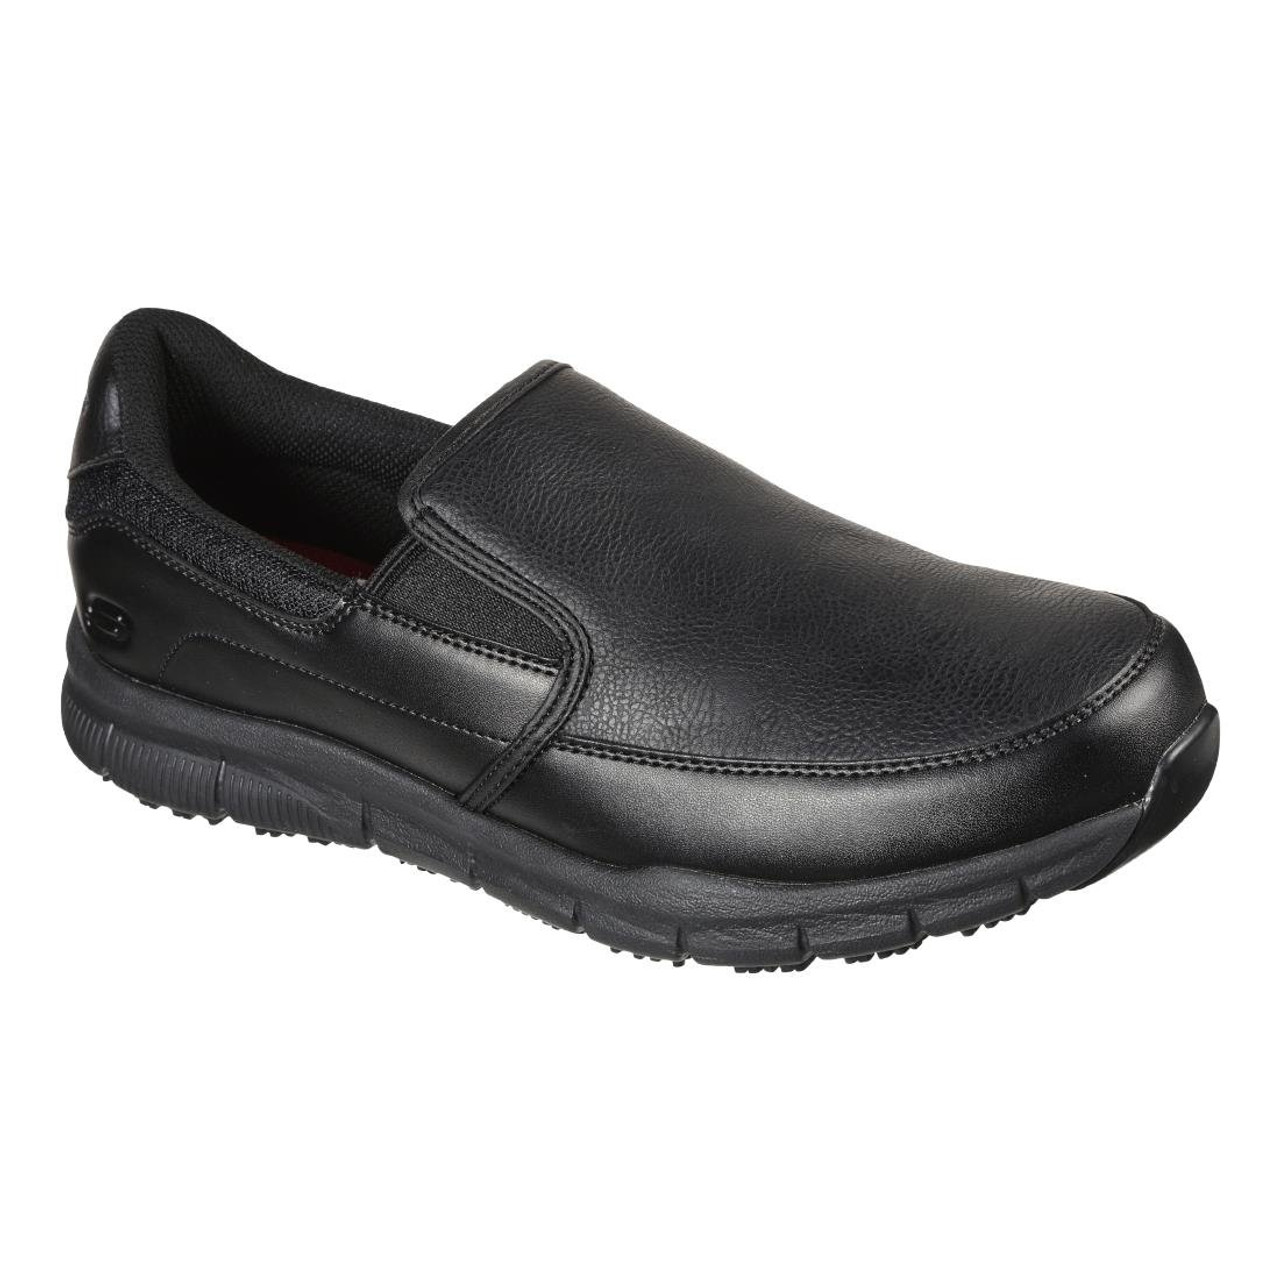 Slip on Resistant Shoe 42 BB676-42 - IPA Supplies